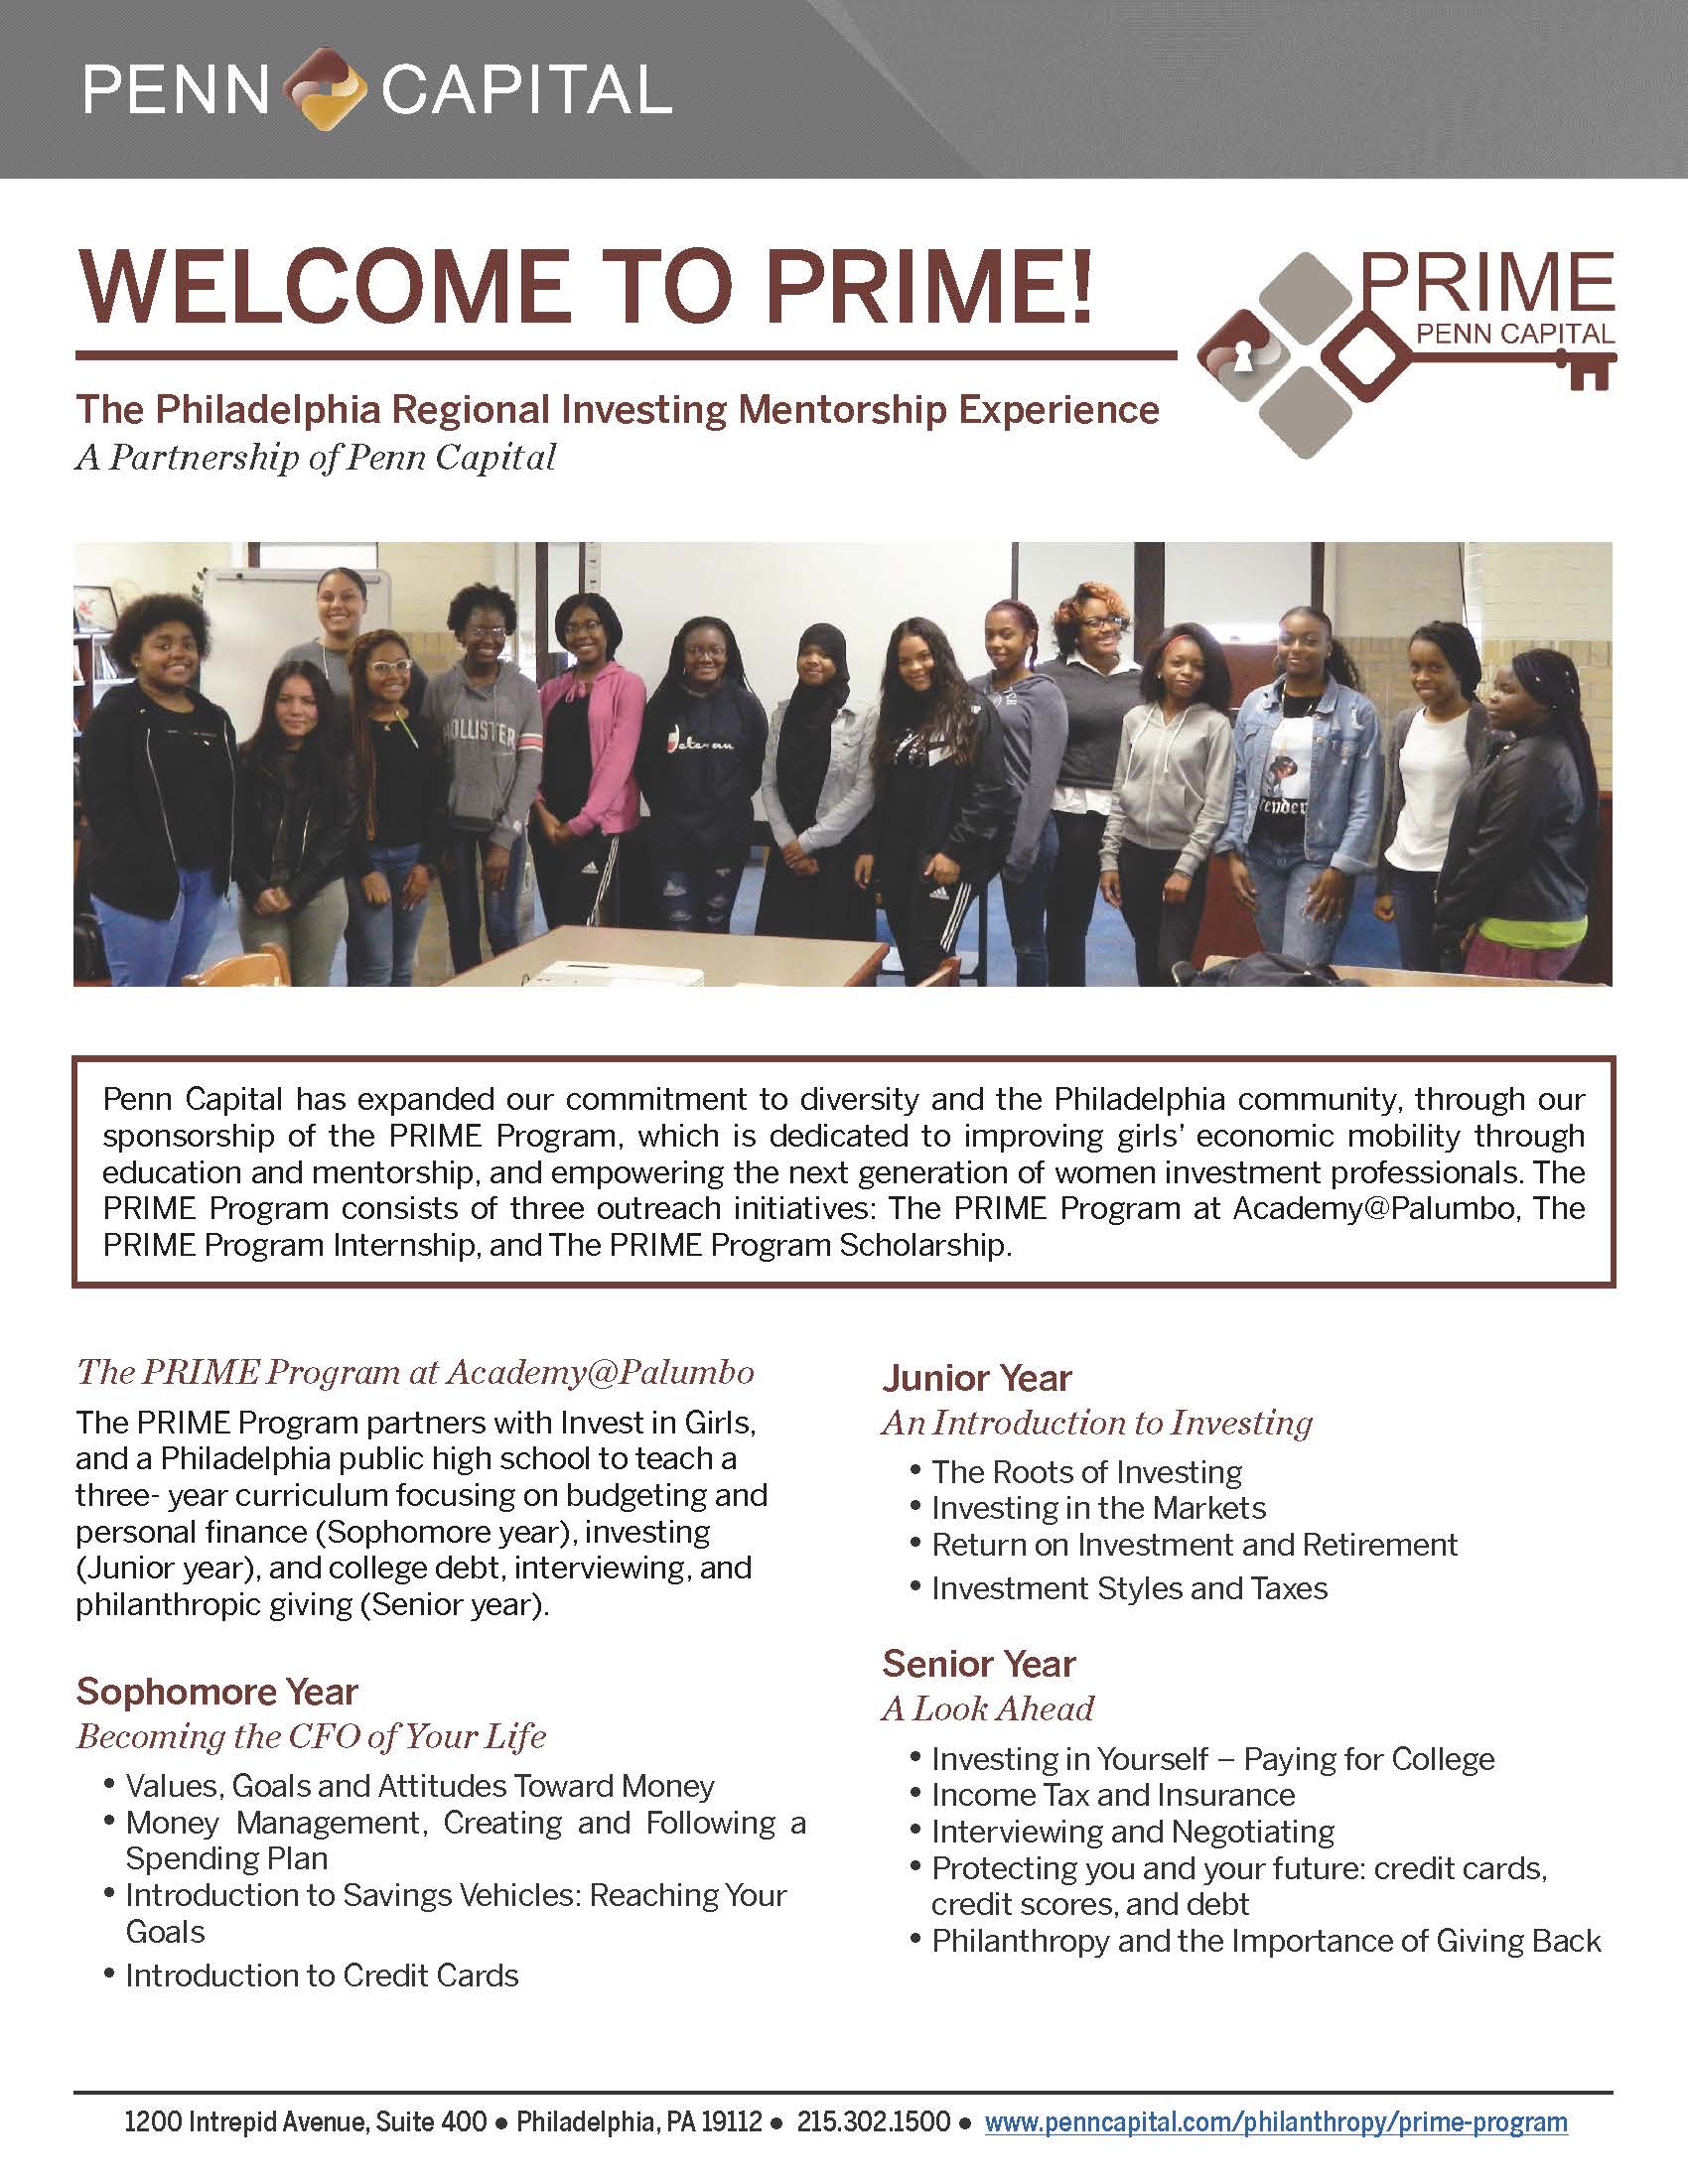 Prime Program Overview